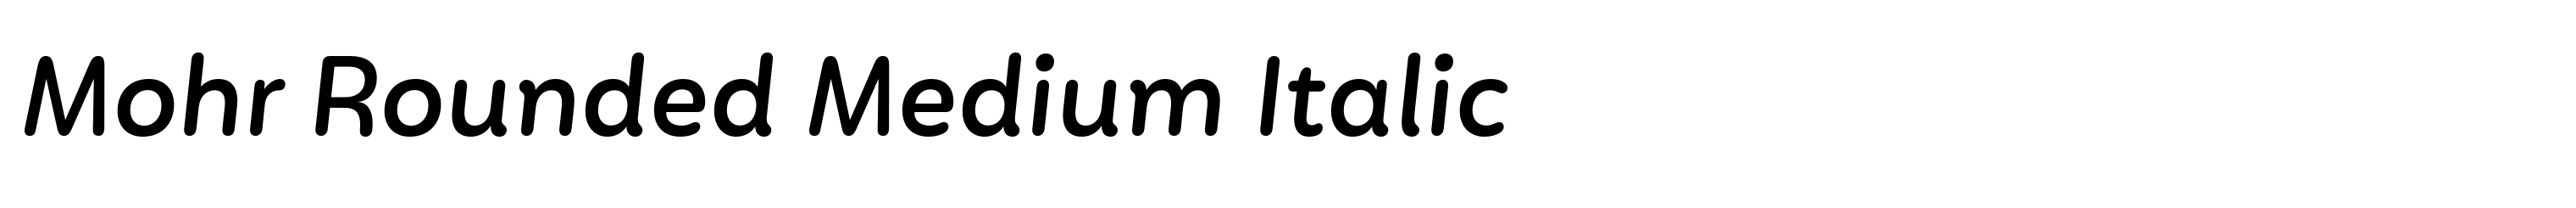 Mohr Rounded Medium Italic